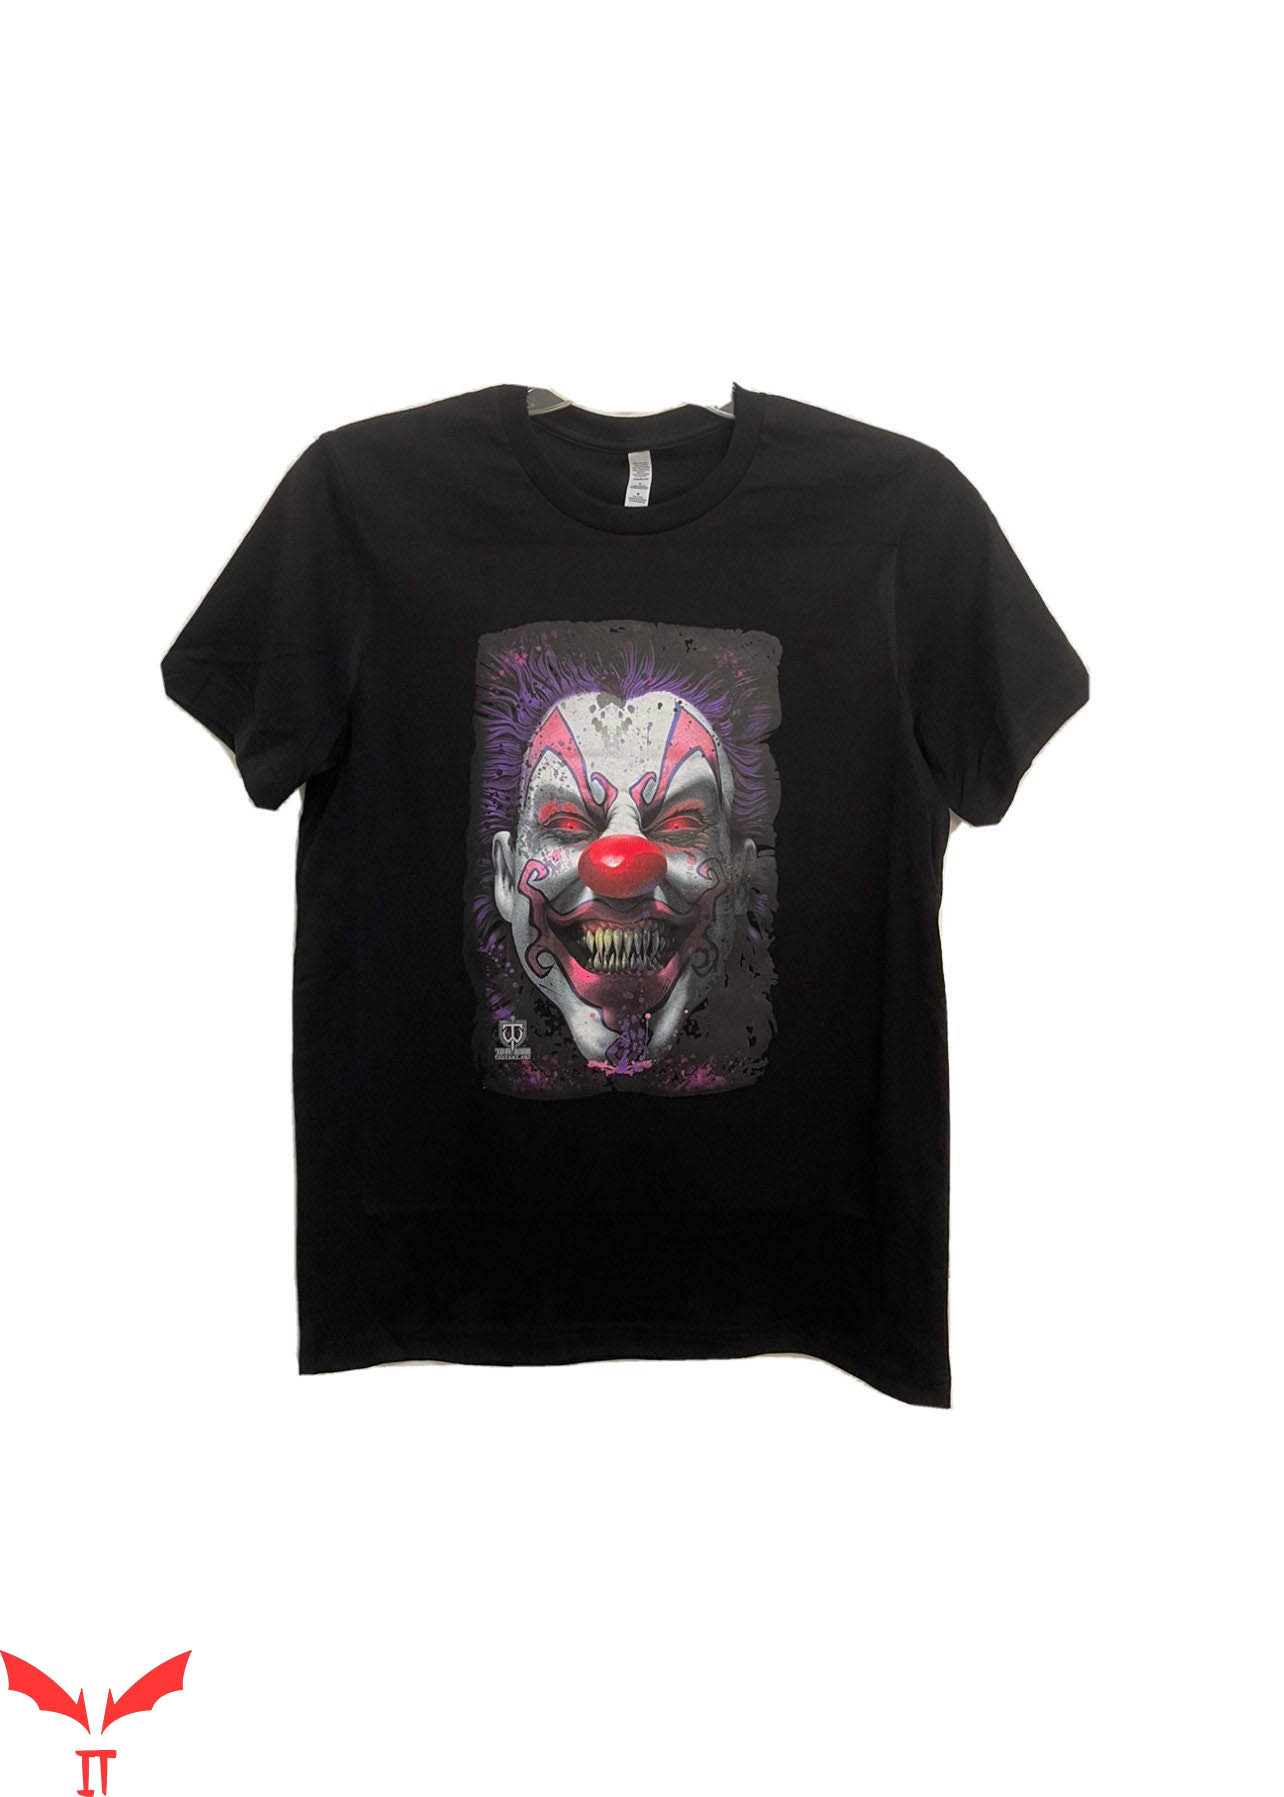 IT The Clown T-Shirt Scary Clown Face Horror IT Movie